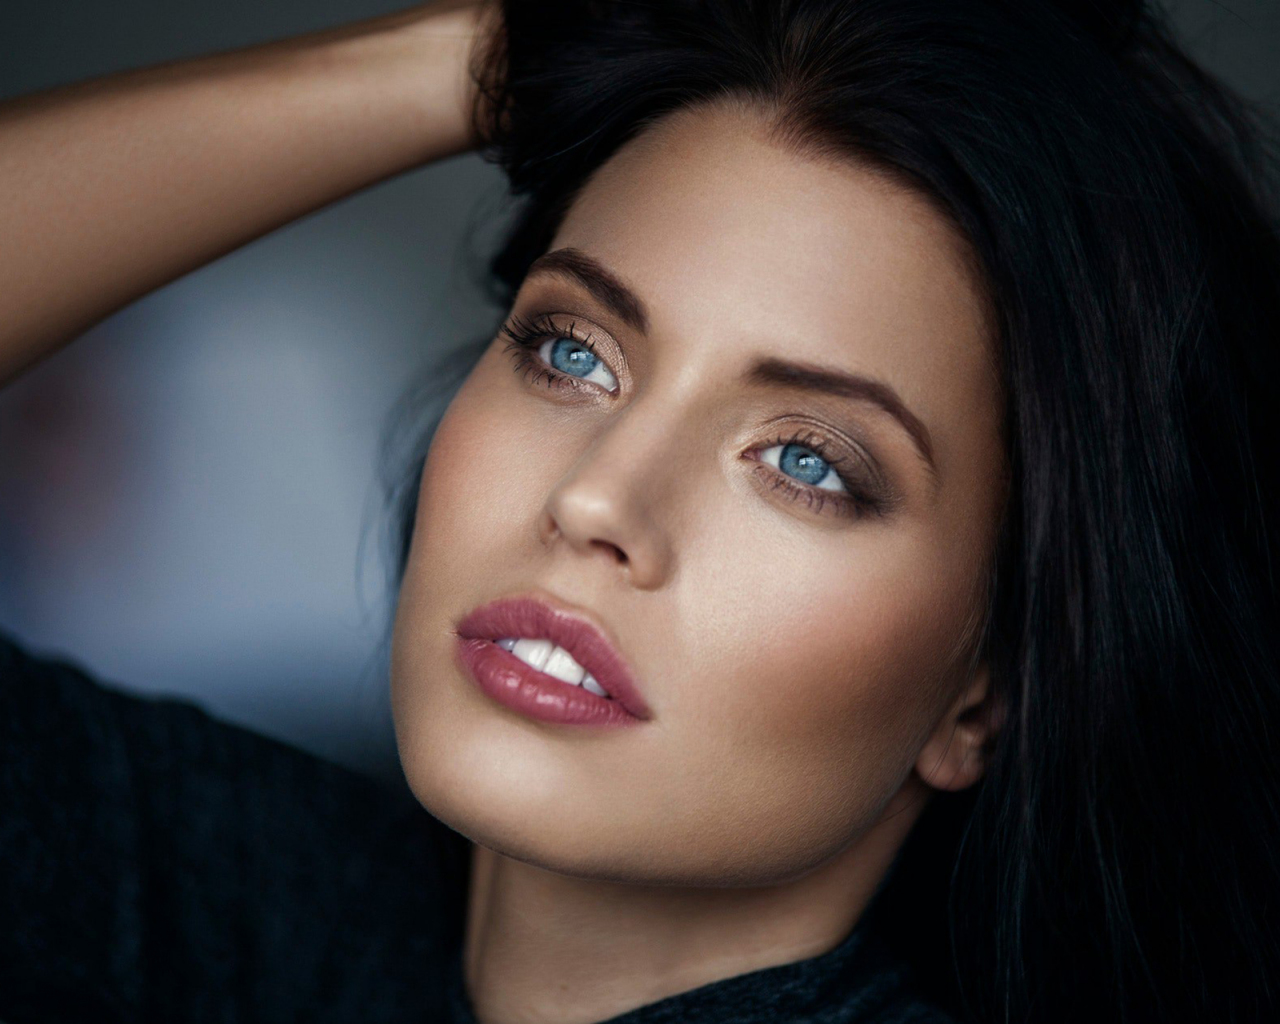 Dark-haired model with striking blue eyes - wide 2